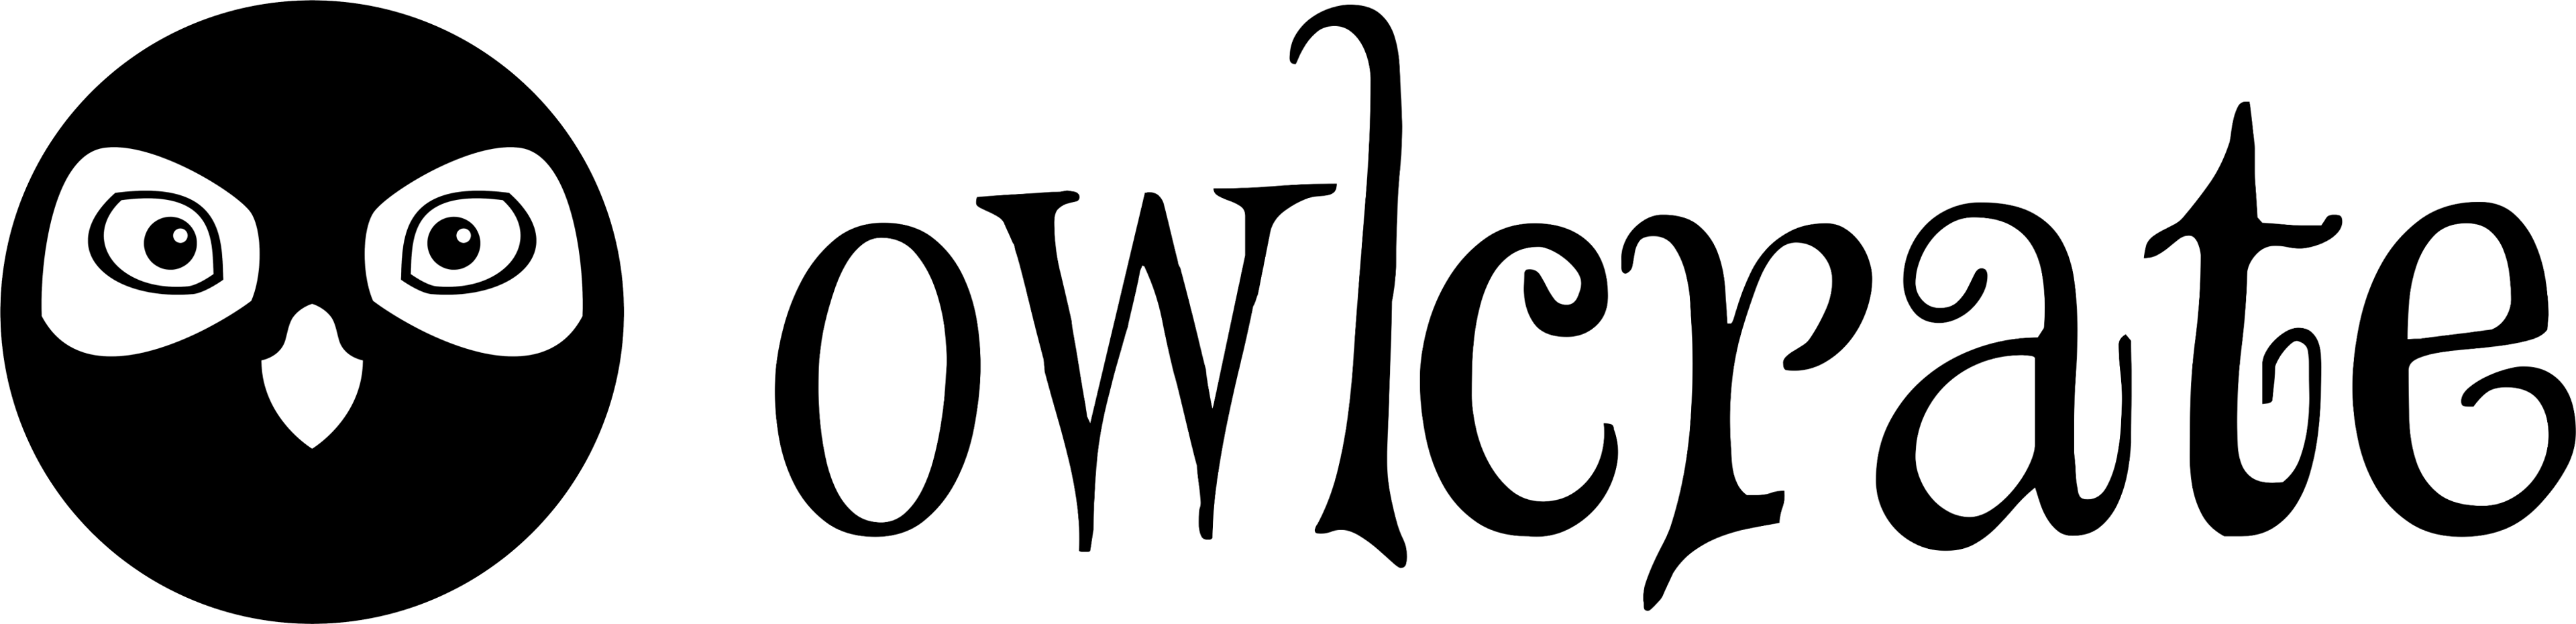 OwlCrate logo